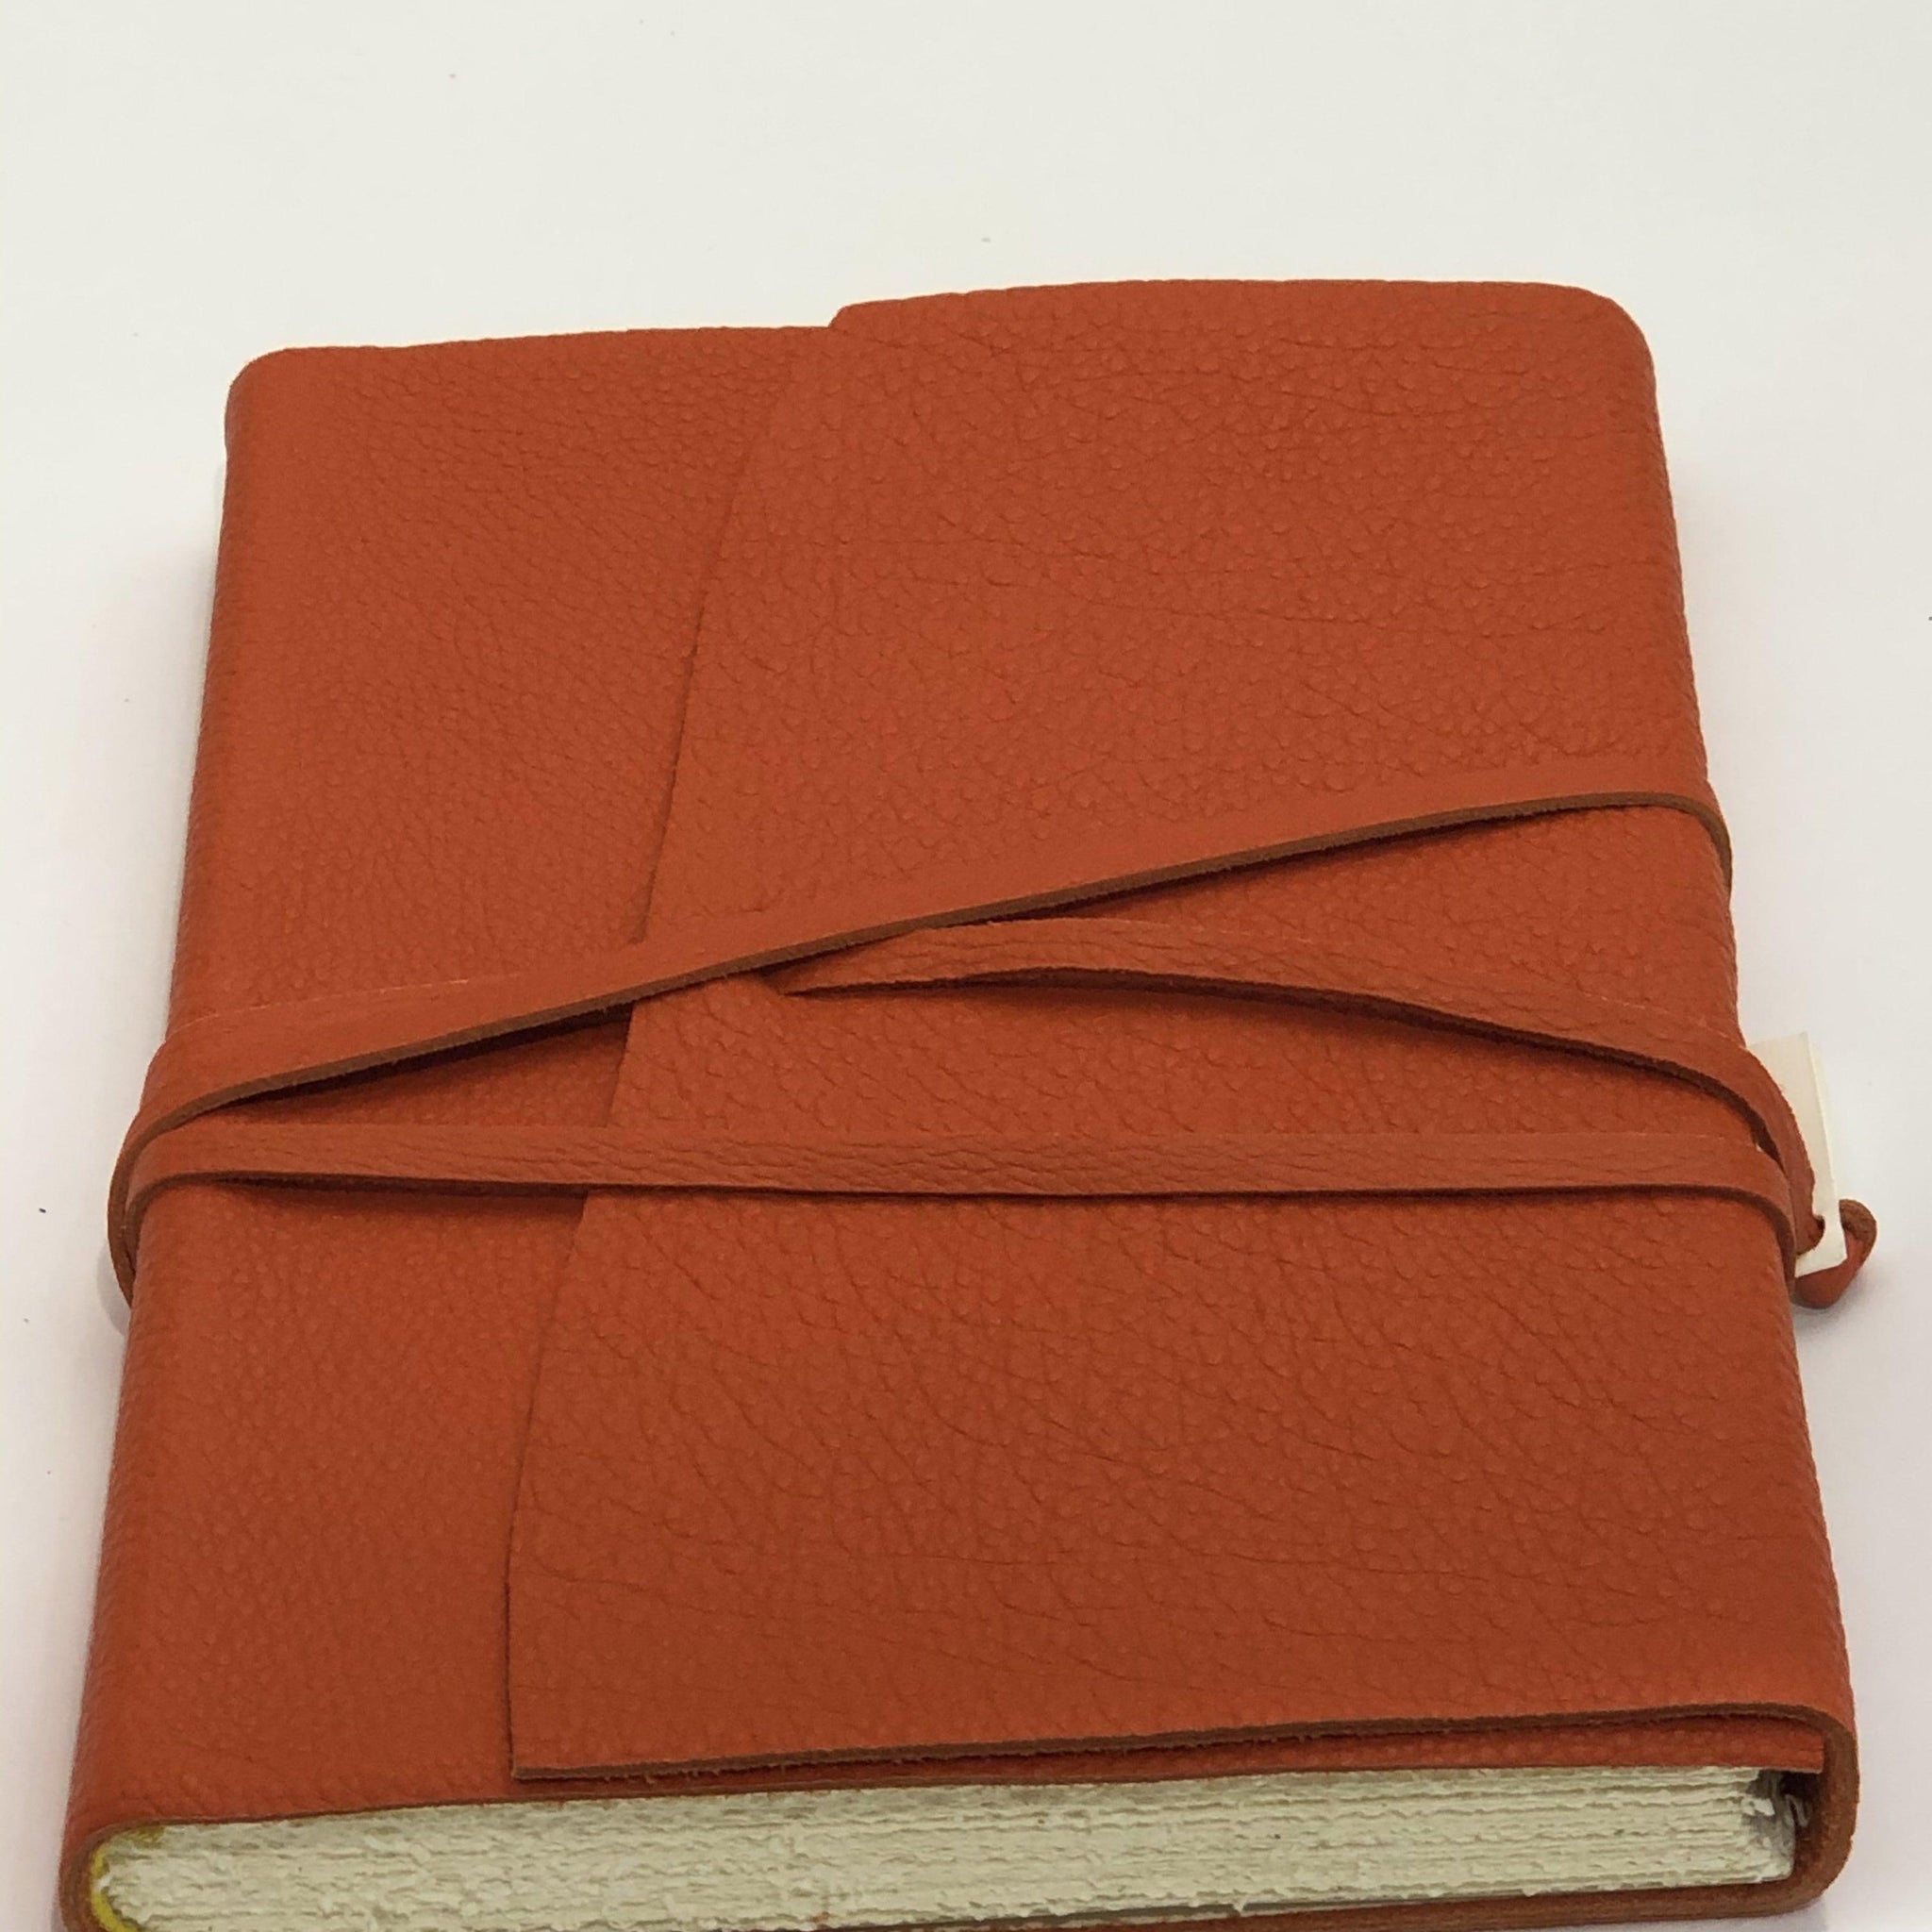 Wrap Leather Journal Medioevalis Orange Medium - Handworks Nouveau Paperie